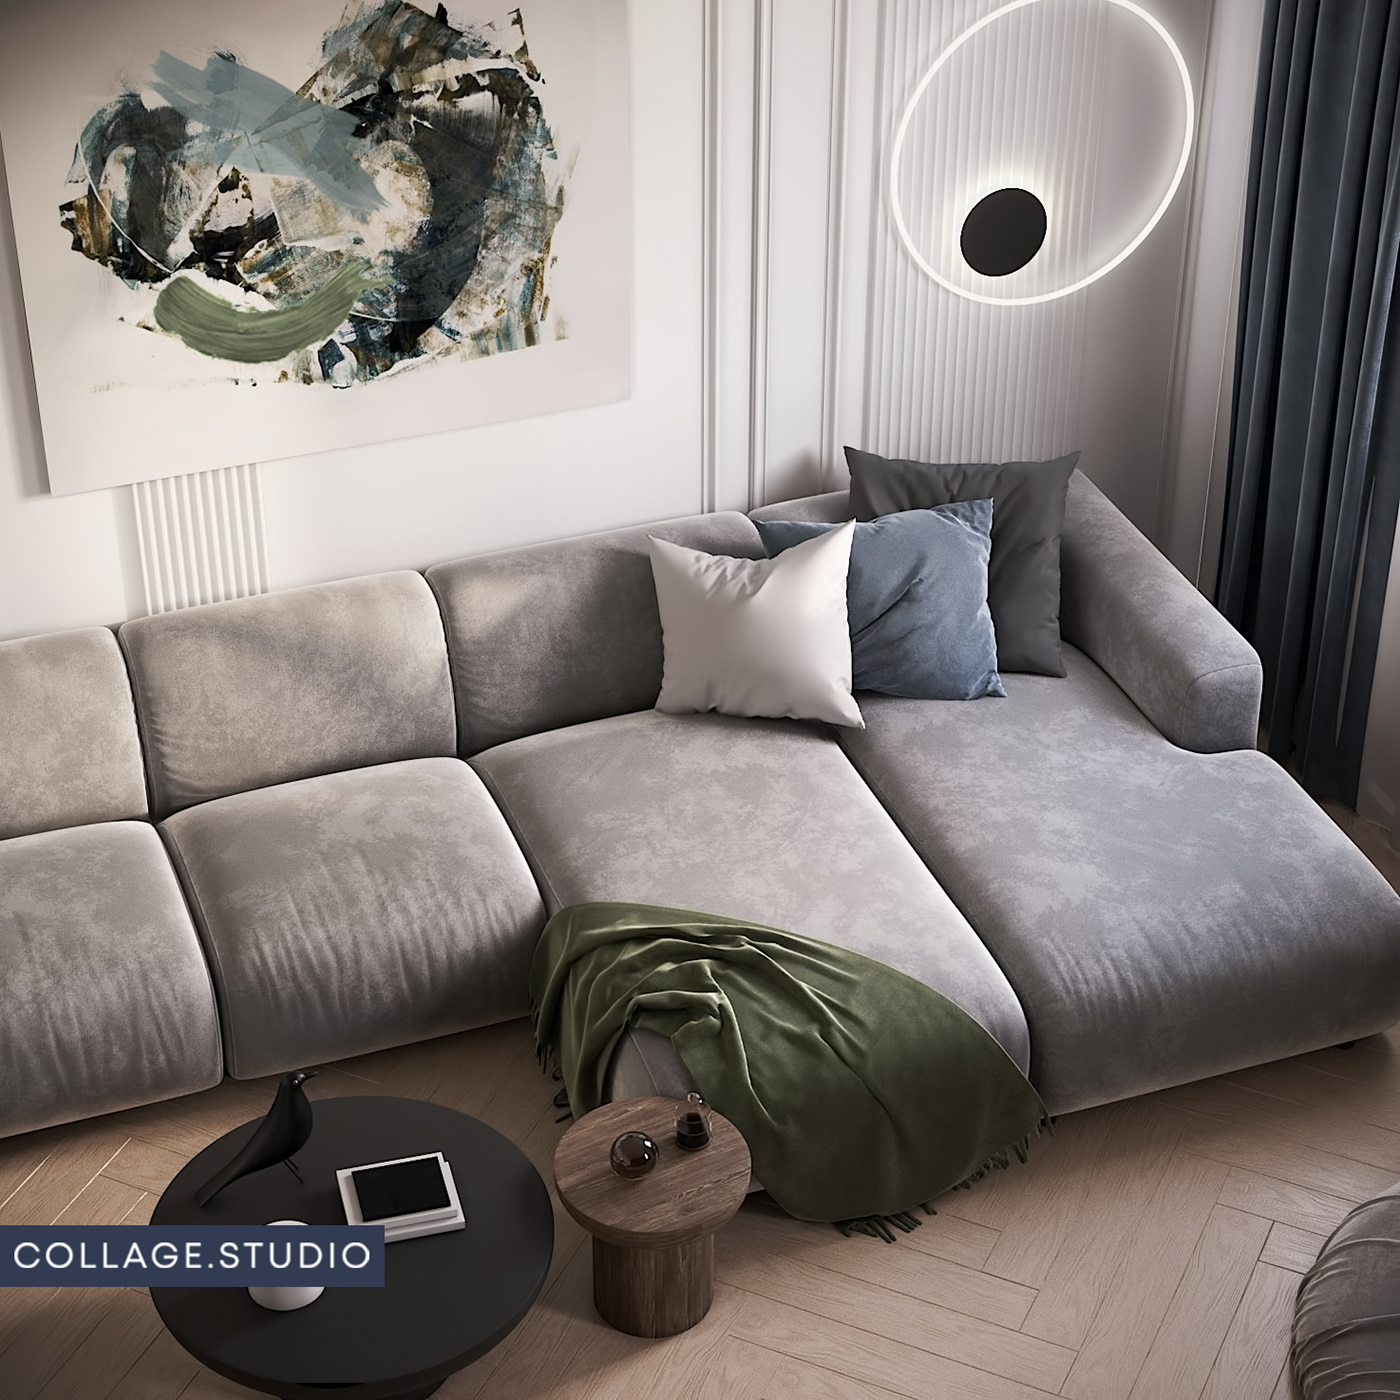 Classic interior design  living room Modern Design Modern Style neoclassic гостиная   дизайн интерьера дизайнер москва современный интерьер